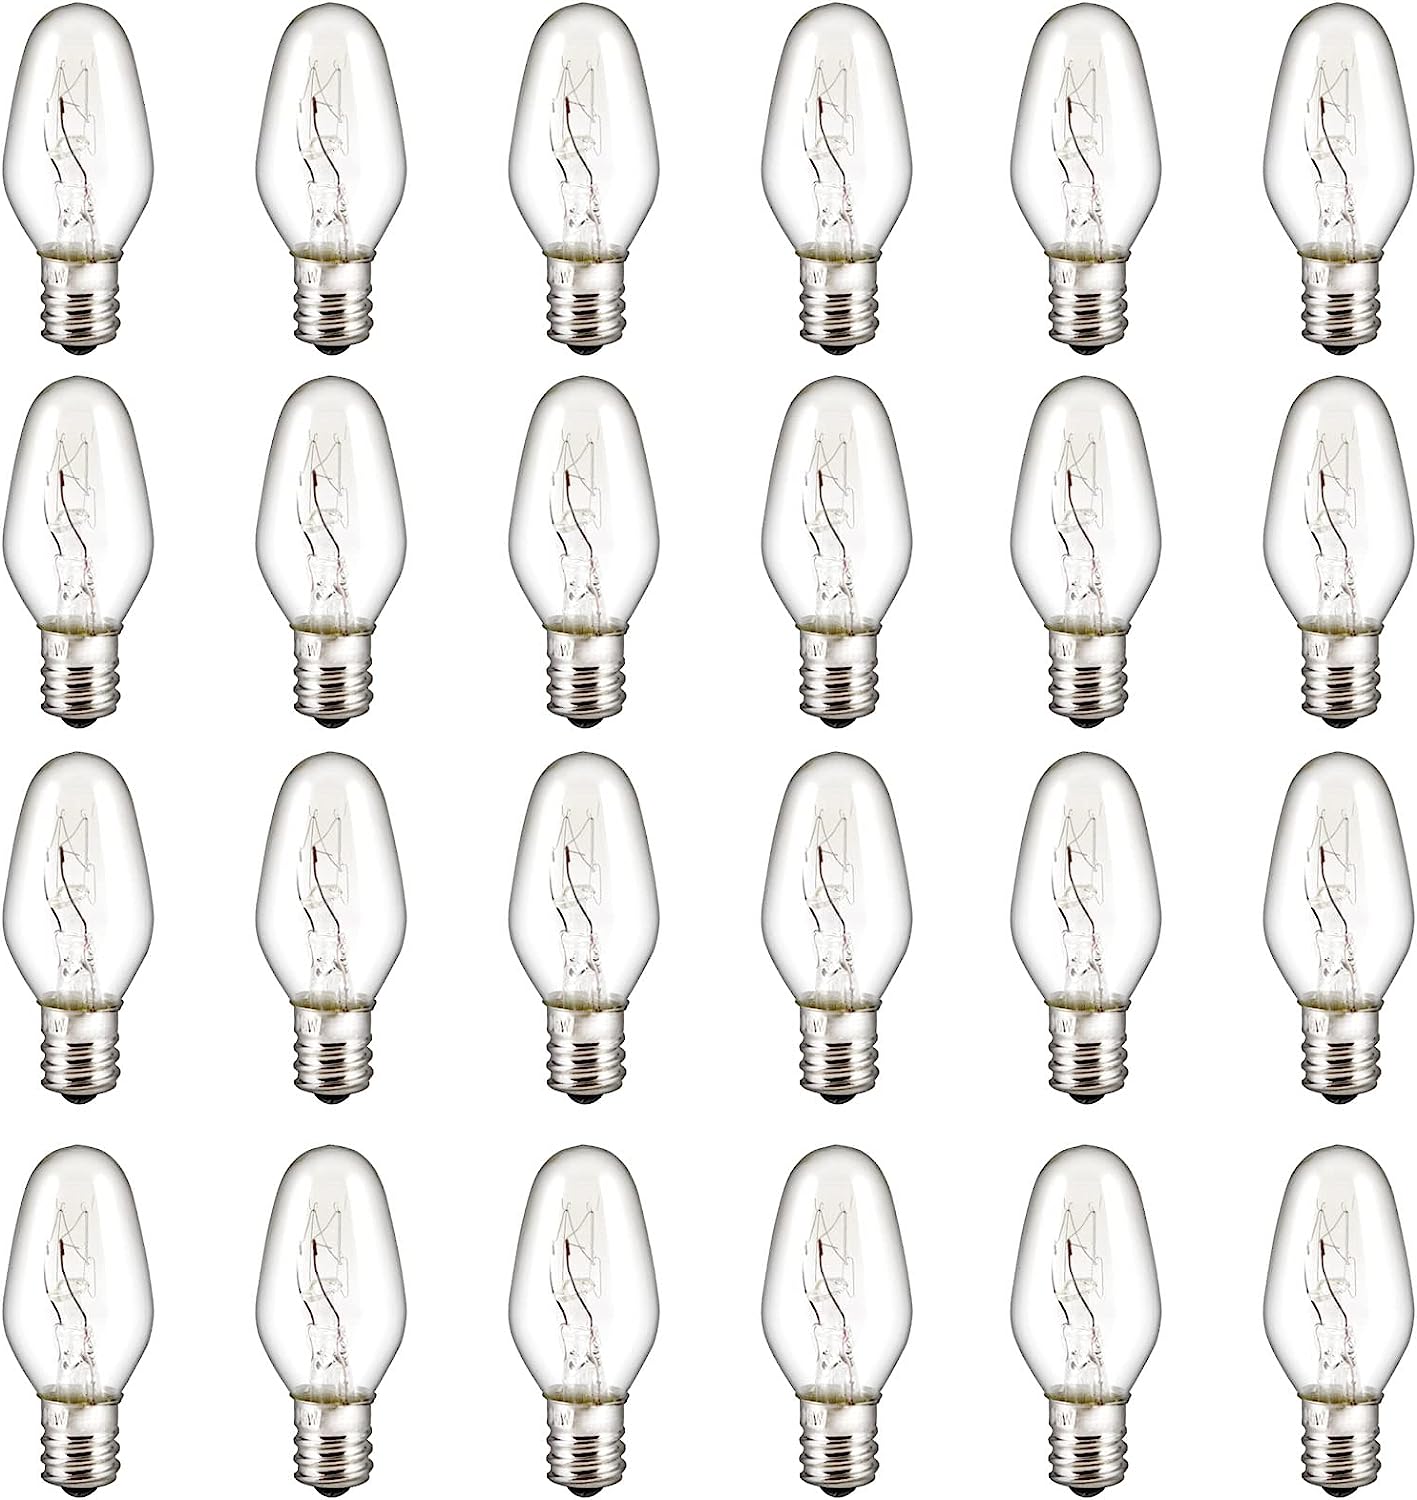 LinMiFo Clear Light Bulbs Pack